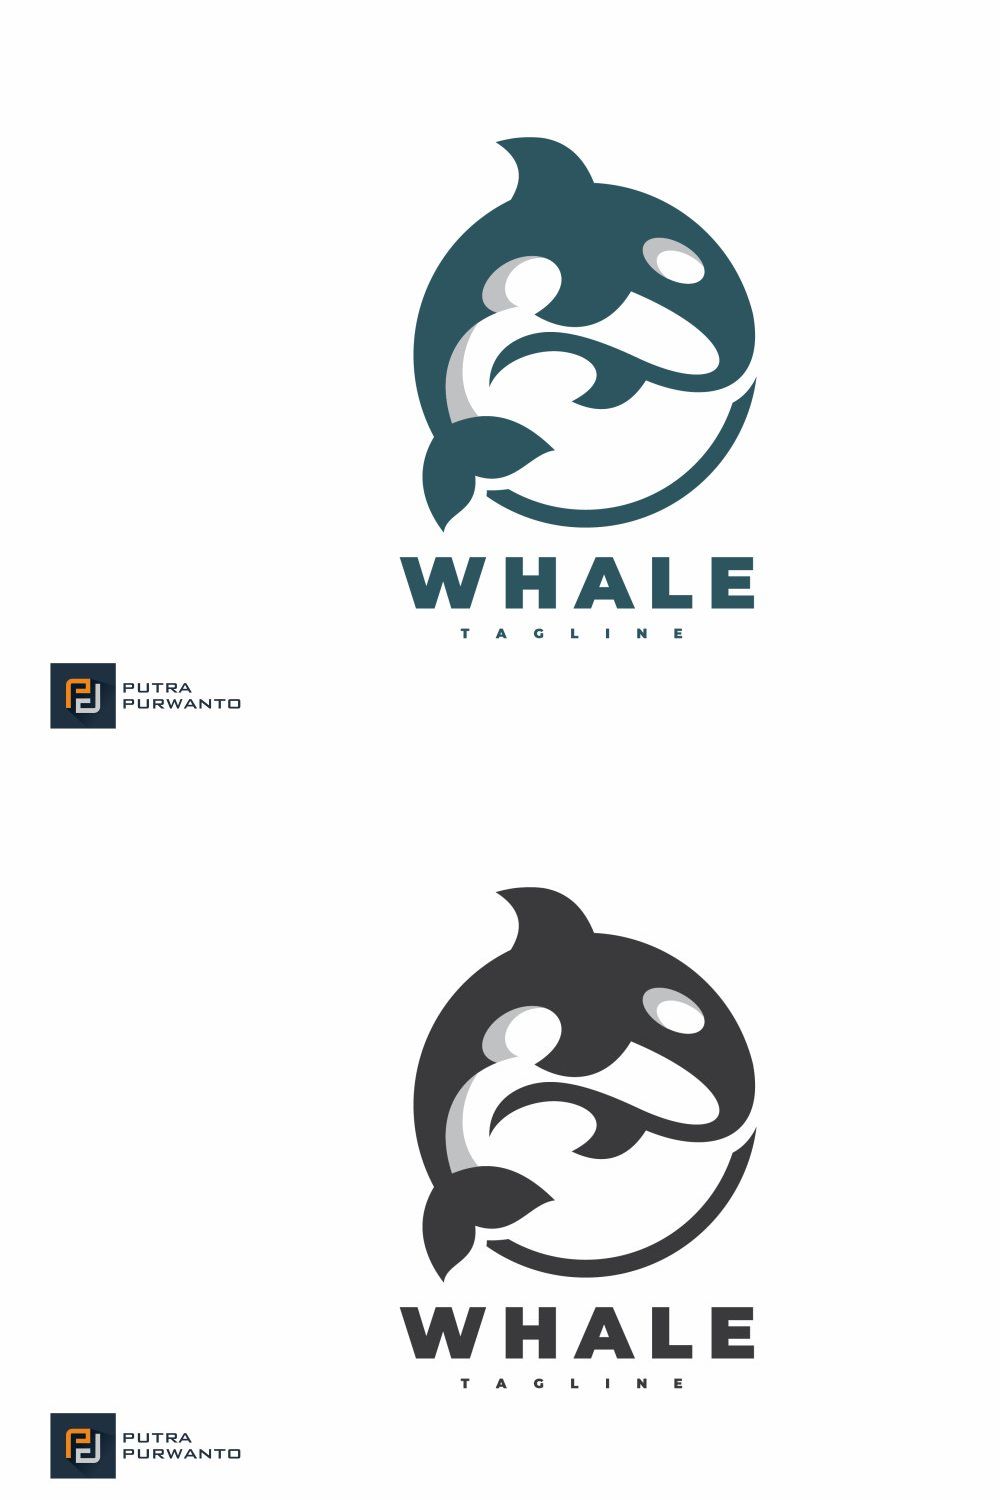 Jumping Killer Whale Logo pinterest preview image.